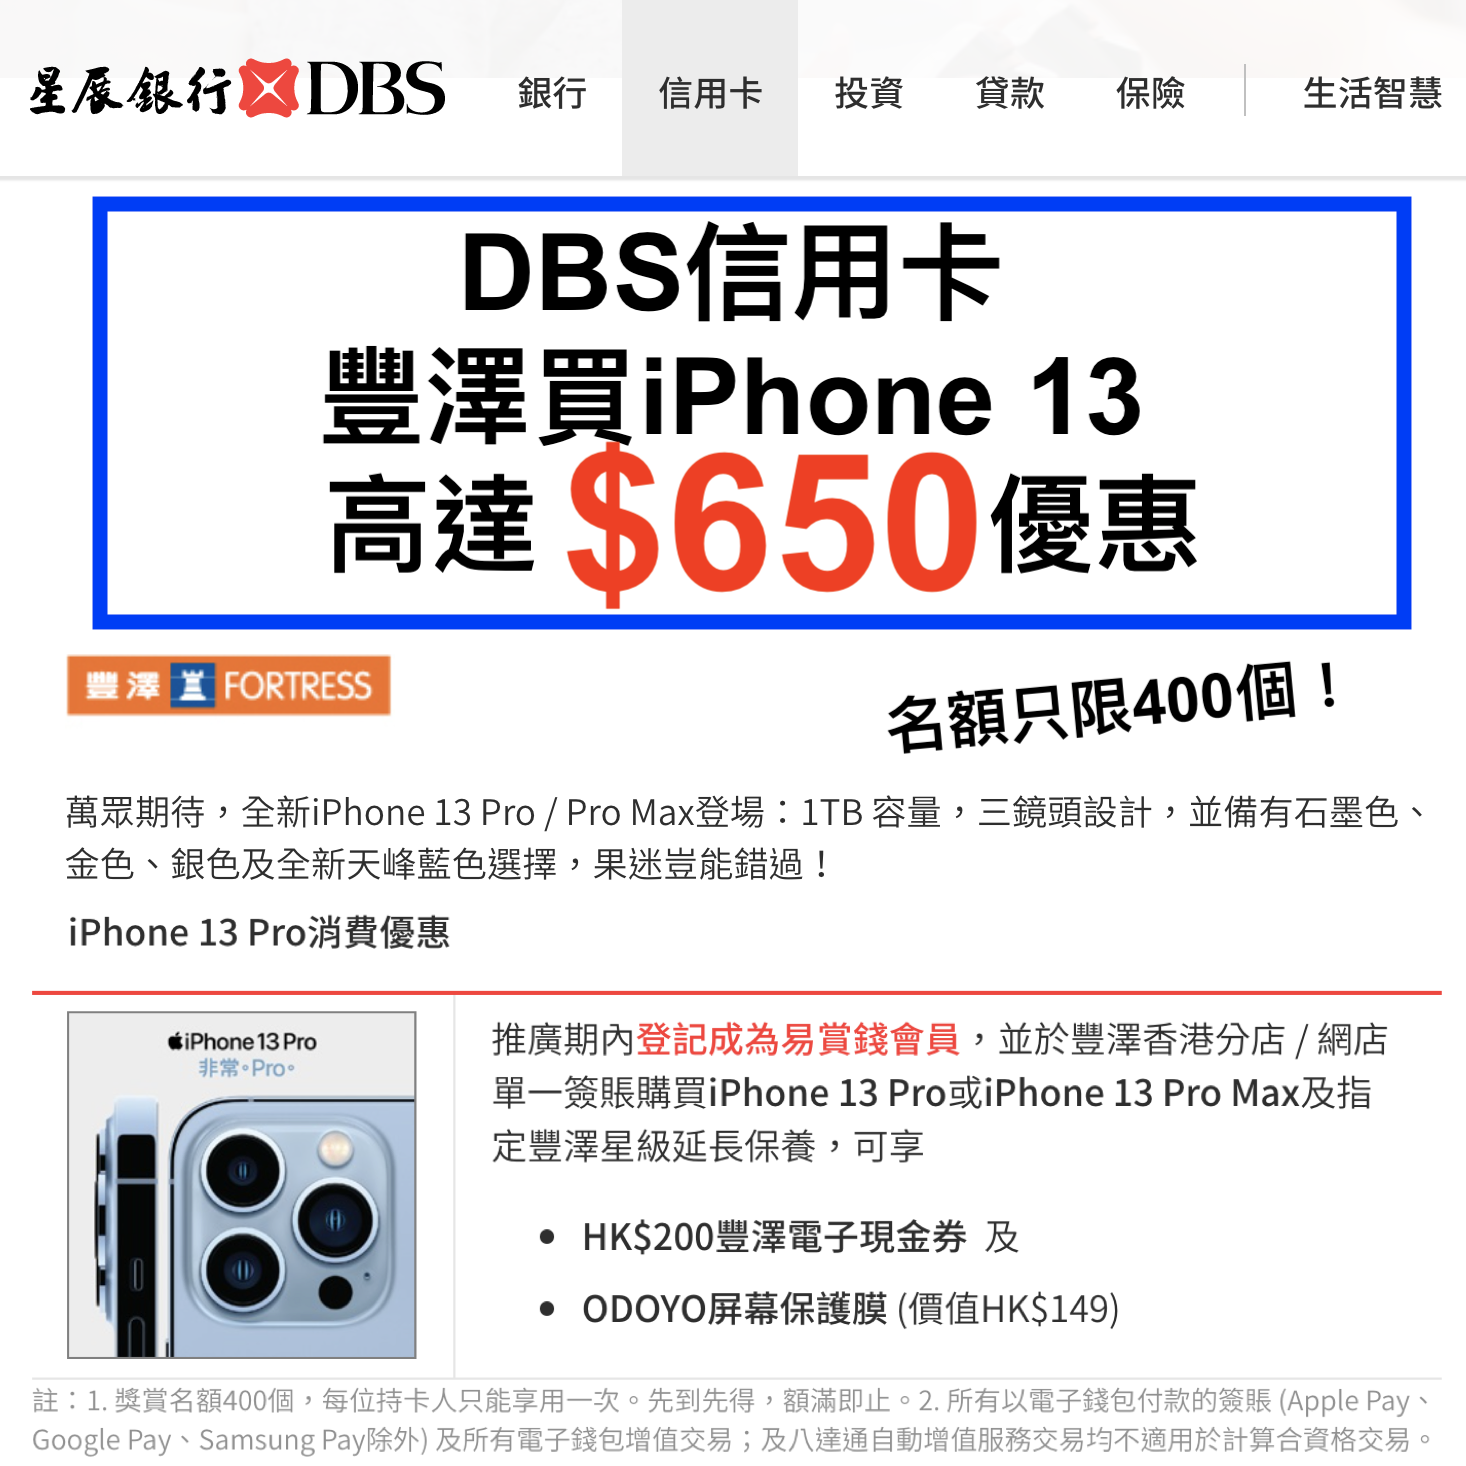 DBS信用卡豐澤優惠